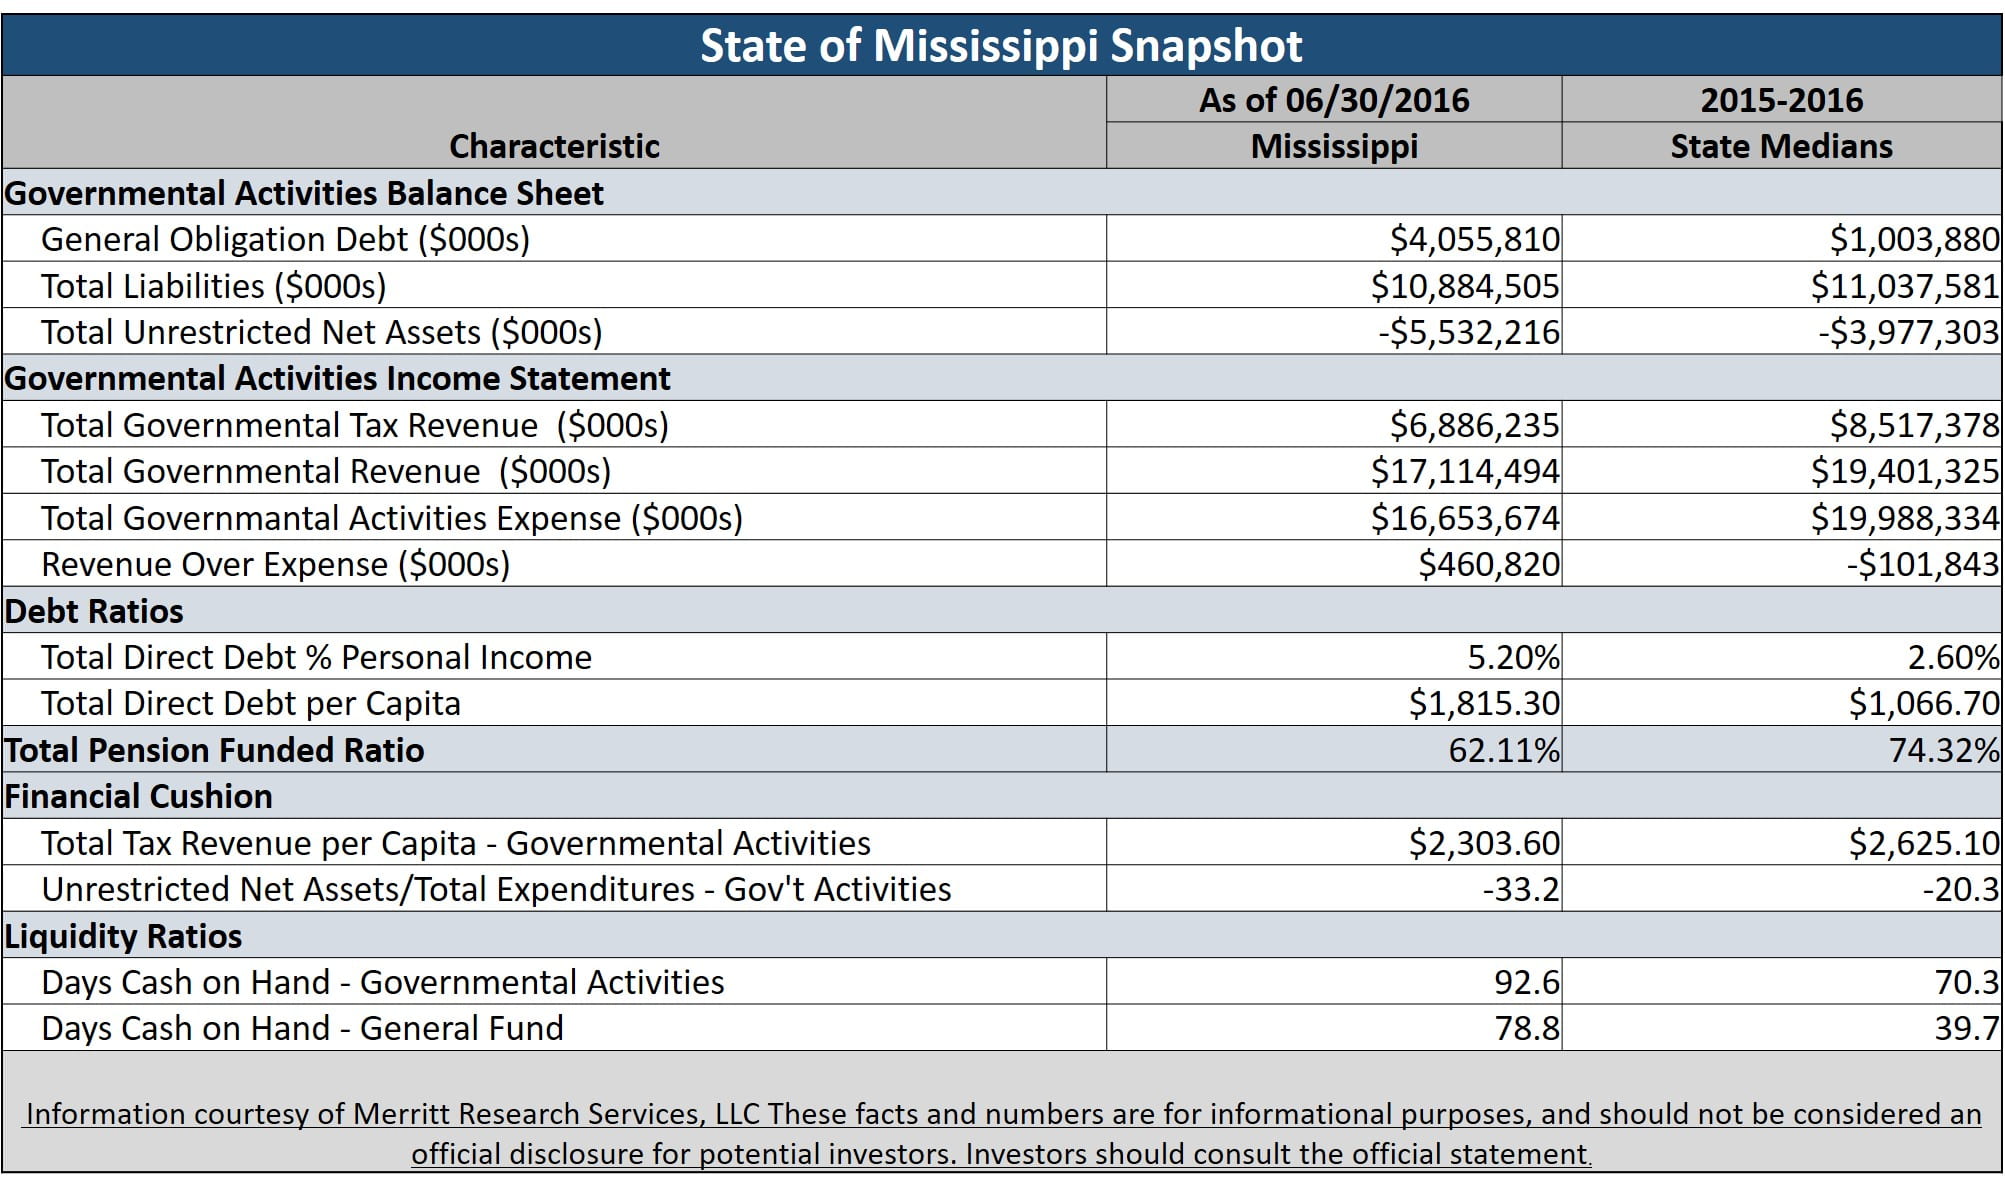 Municipal Bond Featured Snapshot - State of Mississippi